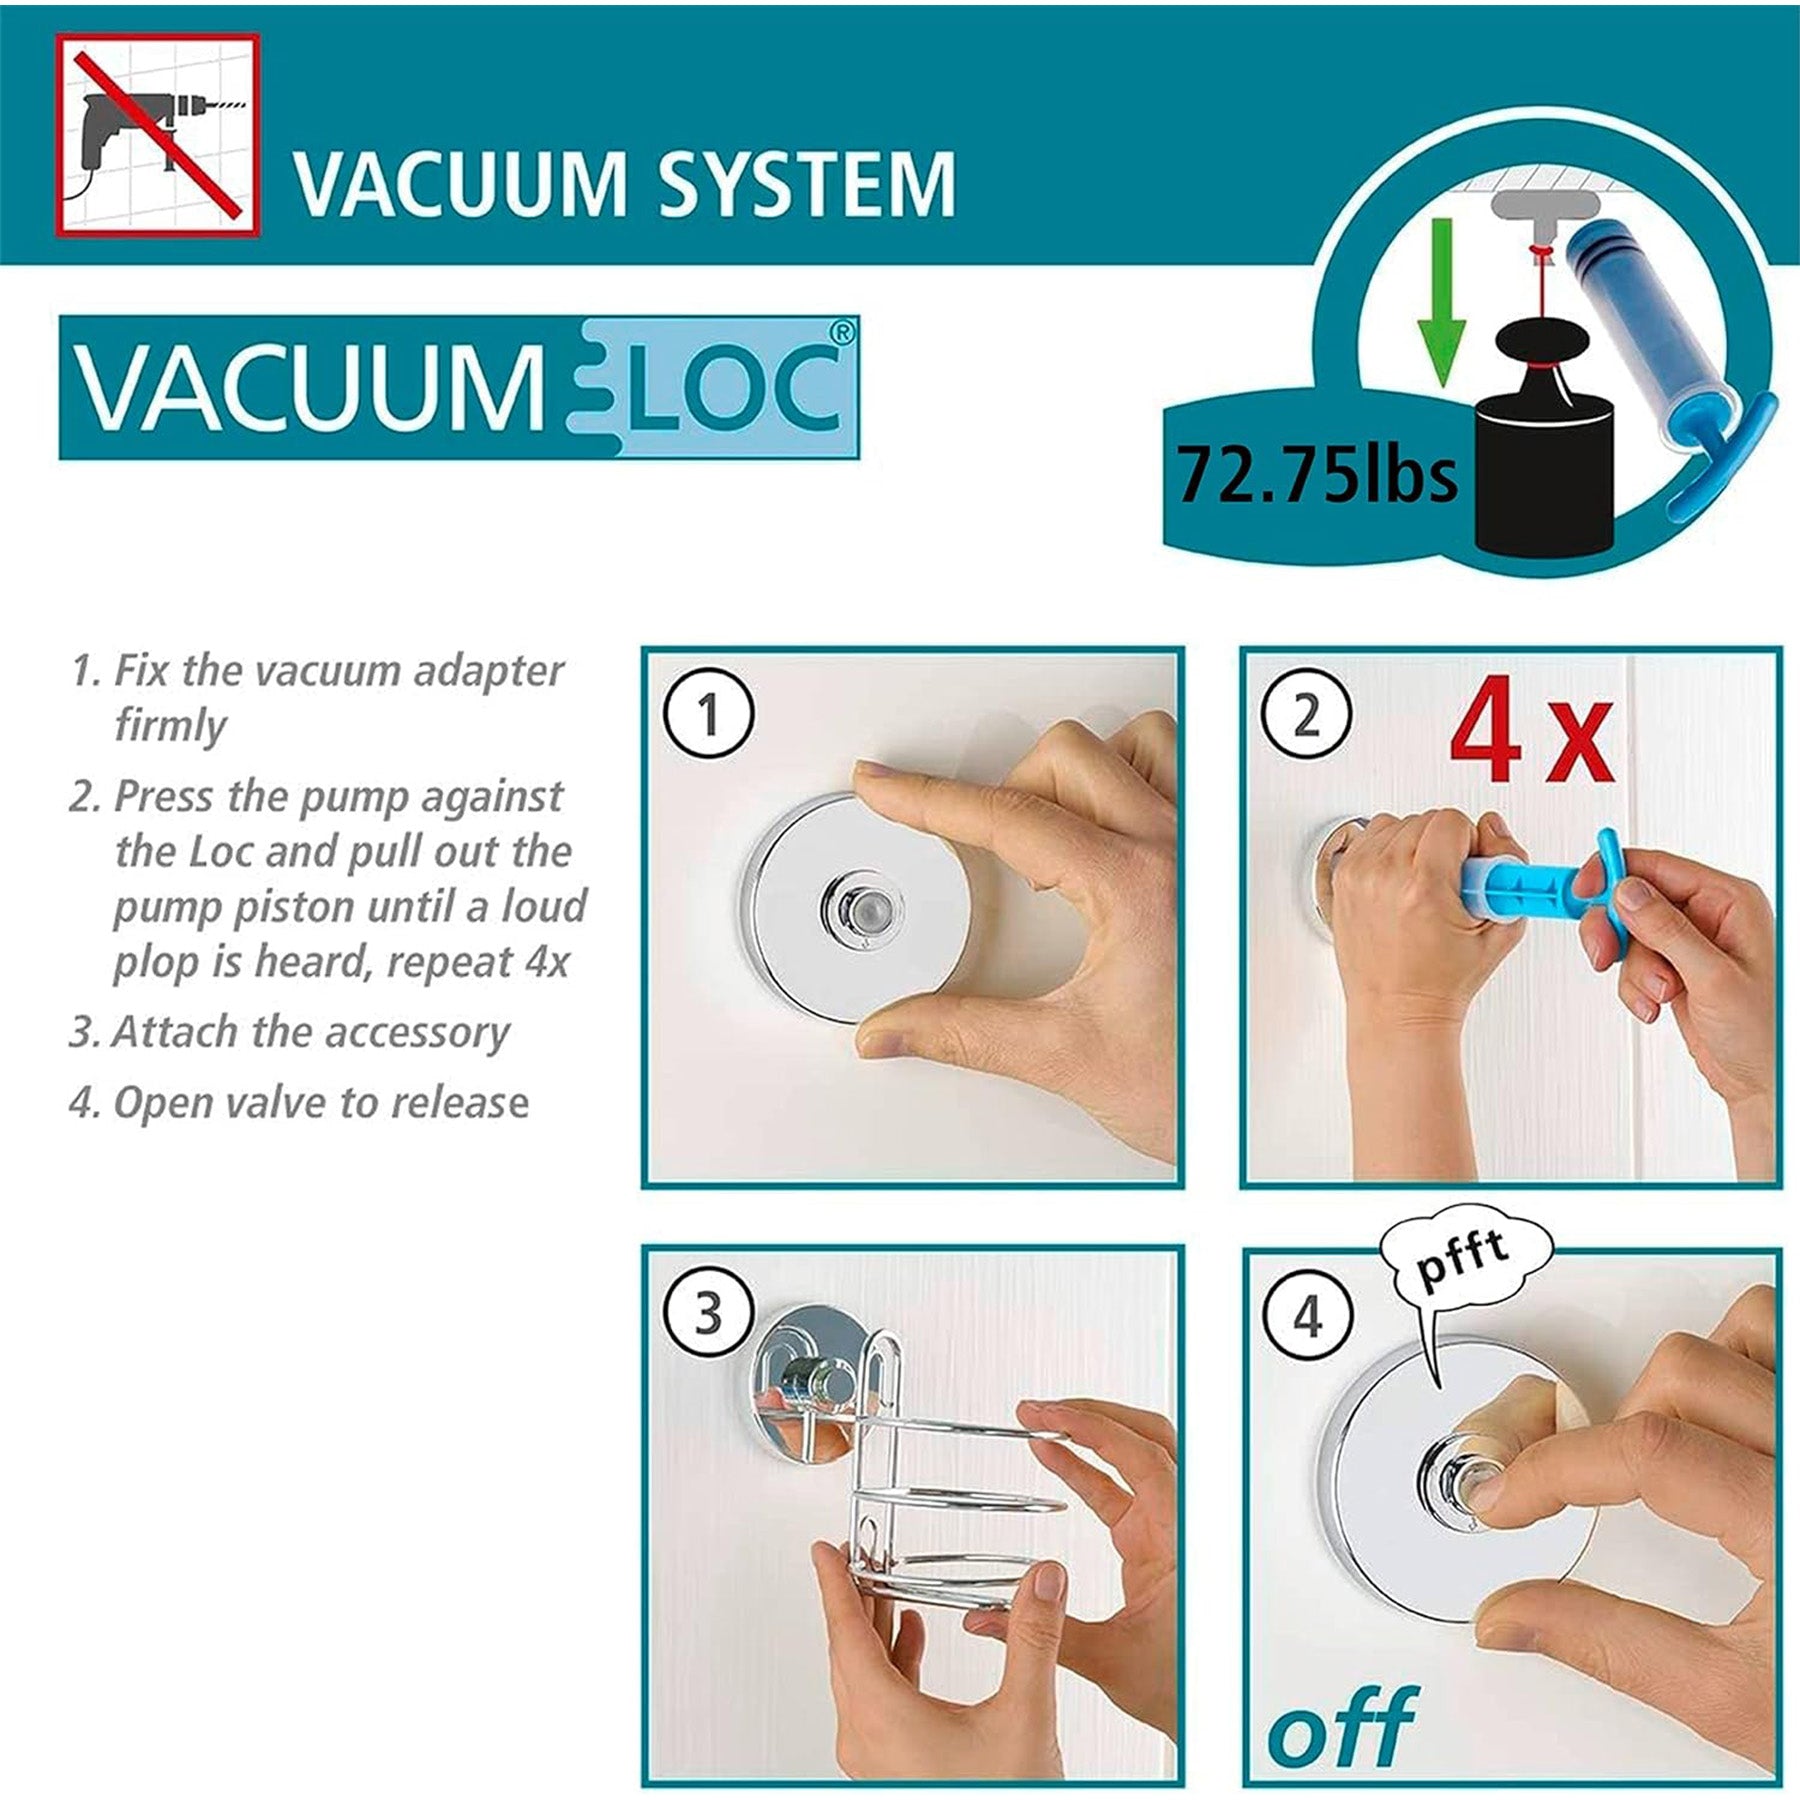 Vacuum-Loc Hook - Set of 2, Plastic, 2.4 x 2.6 x 2 inch, Chrome